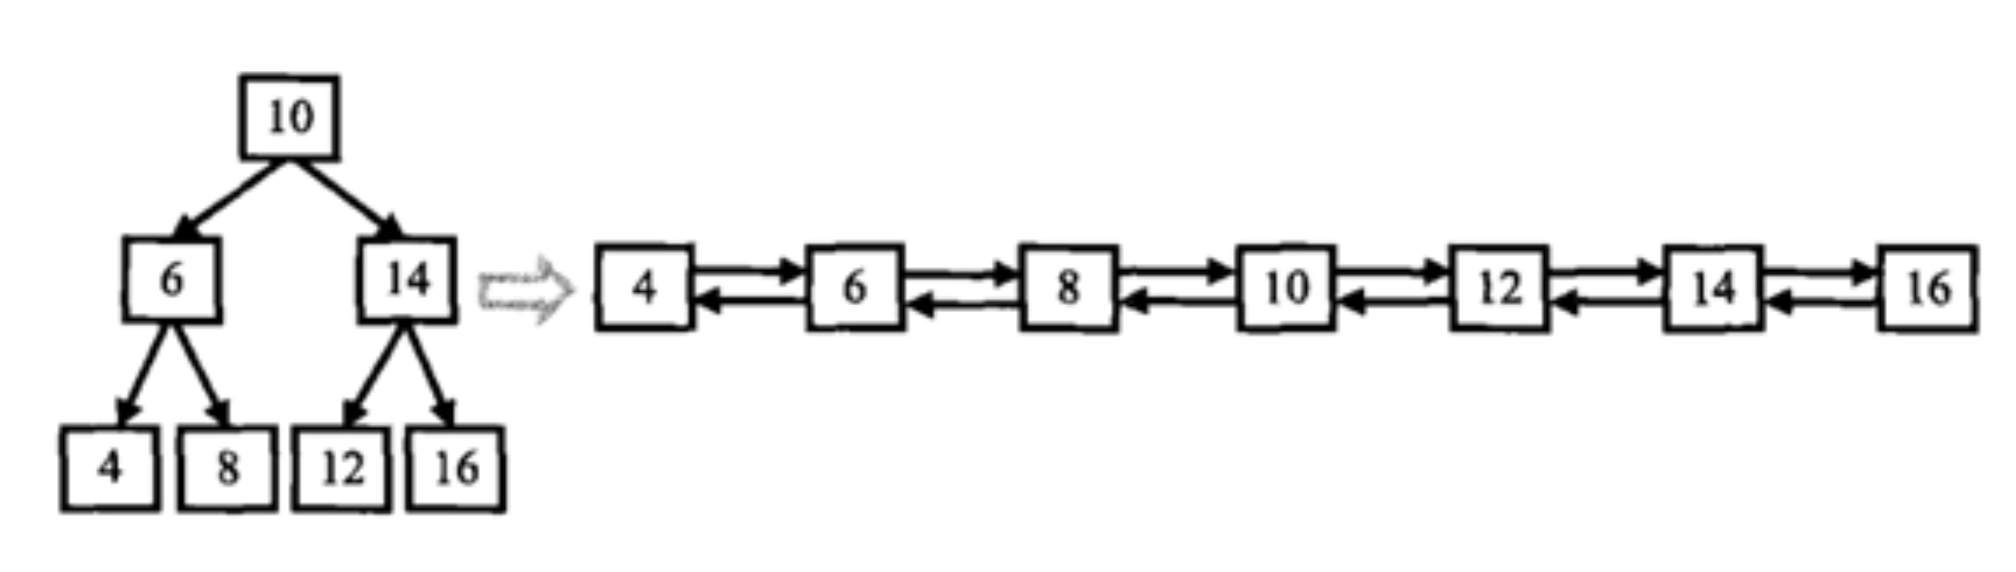 c++--二叉树应用